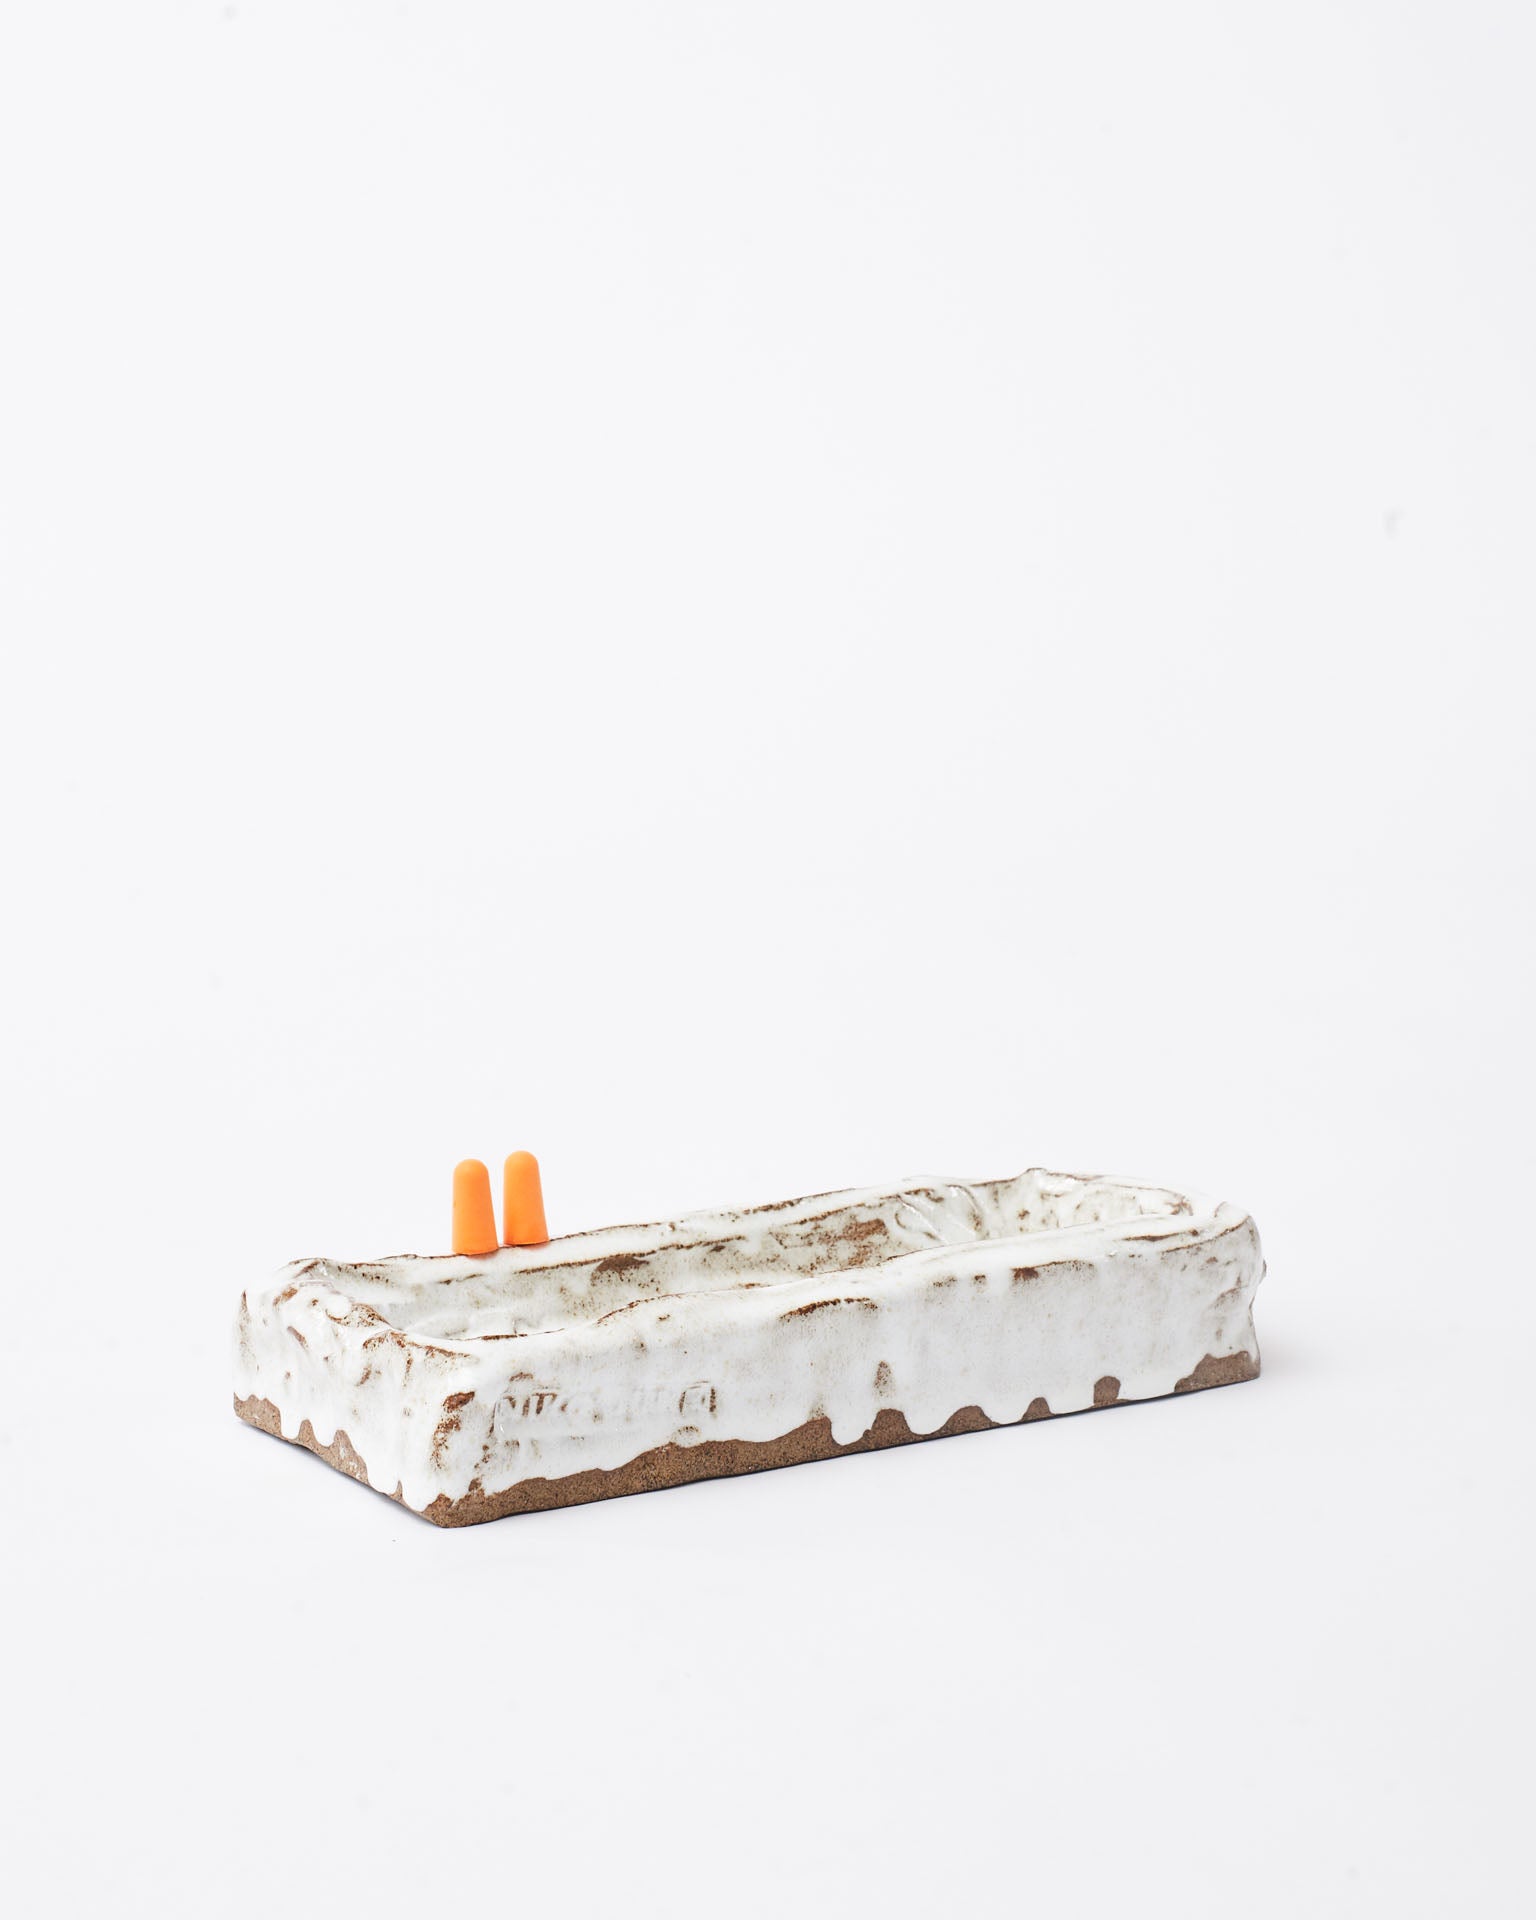 Handmade ceramic organizer object white in white background